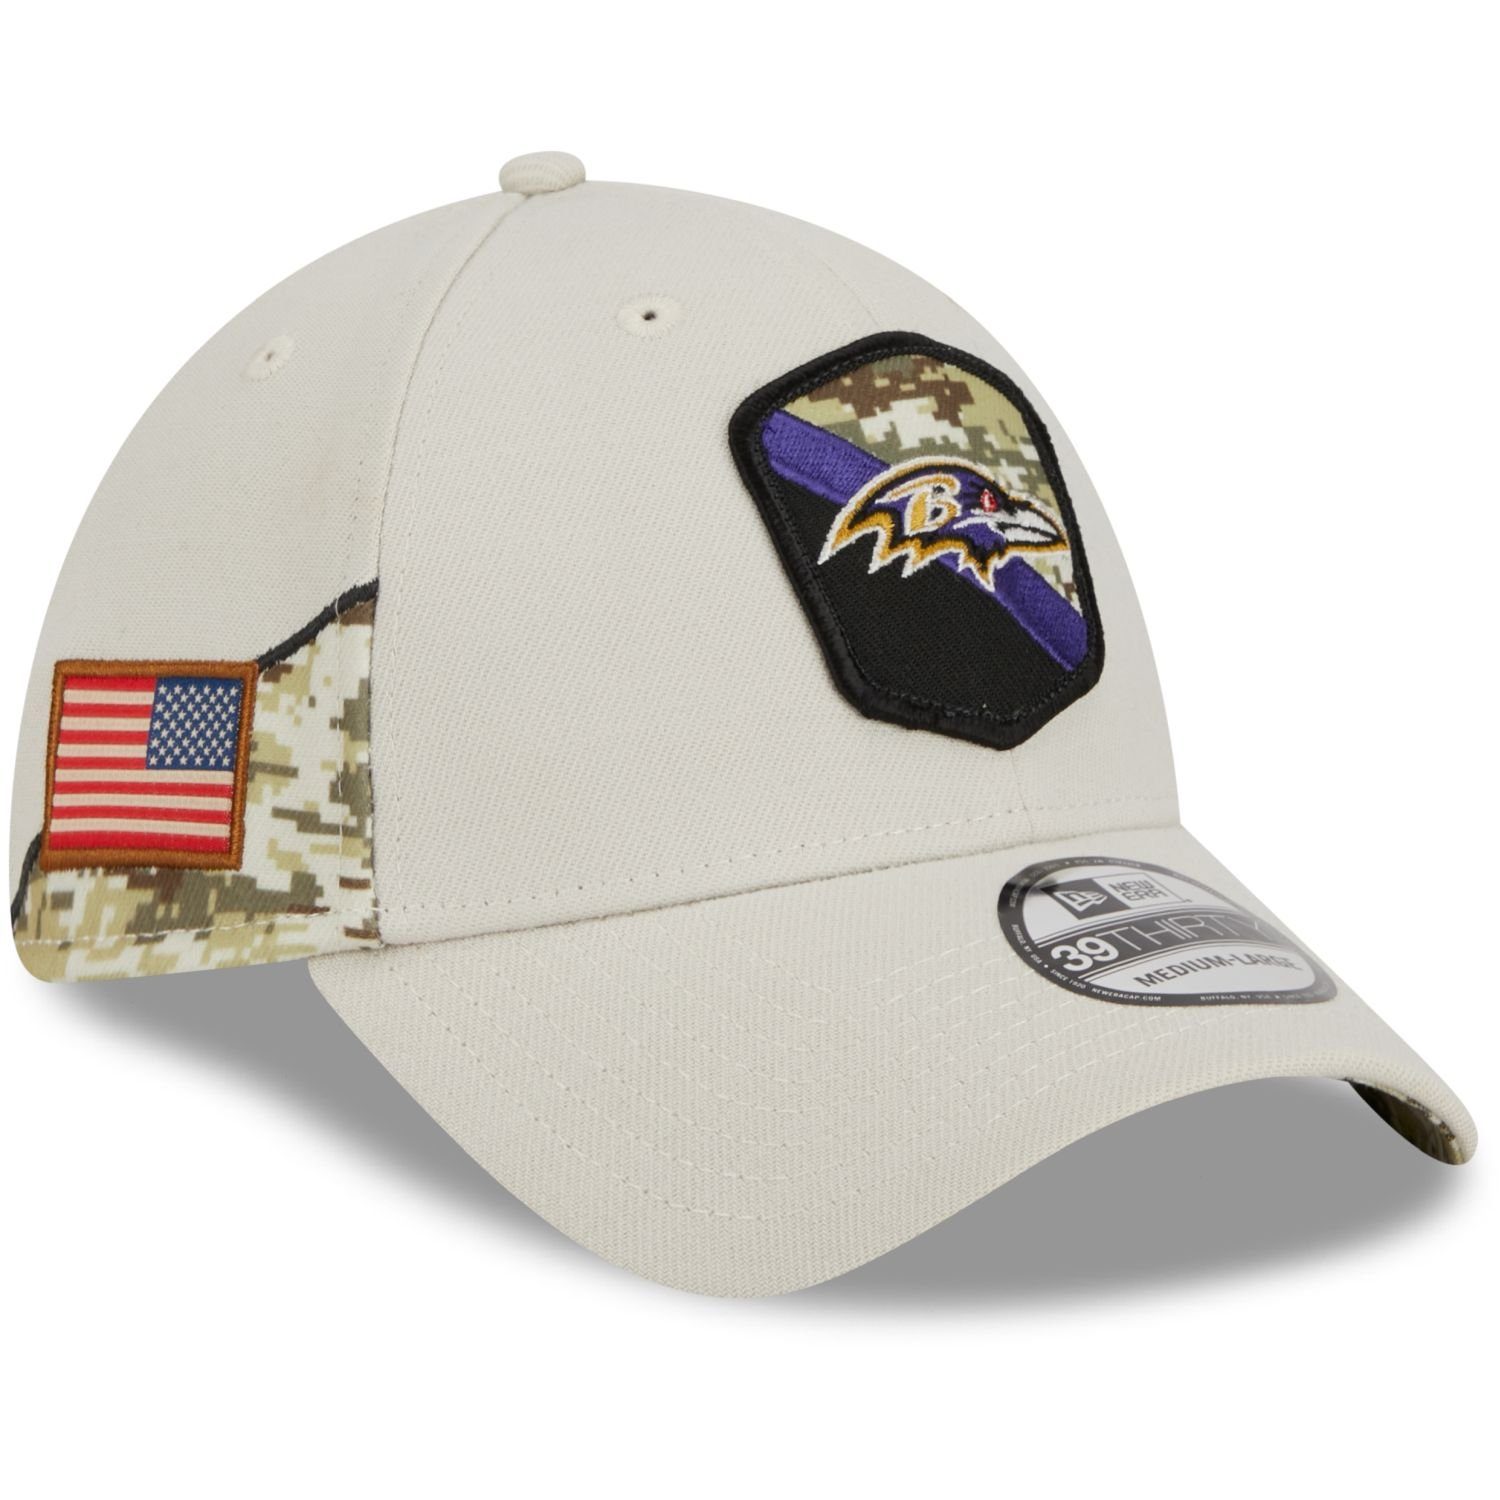 New Era Flex Cap 39Thirty StretchFit NFL Salute to Service Baltimore Ravens